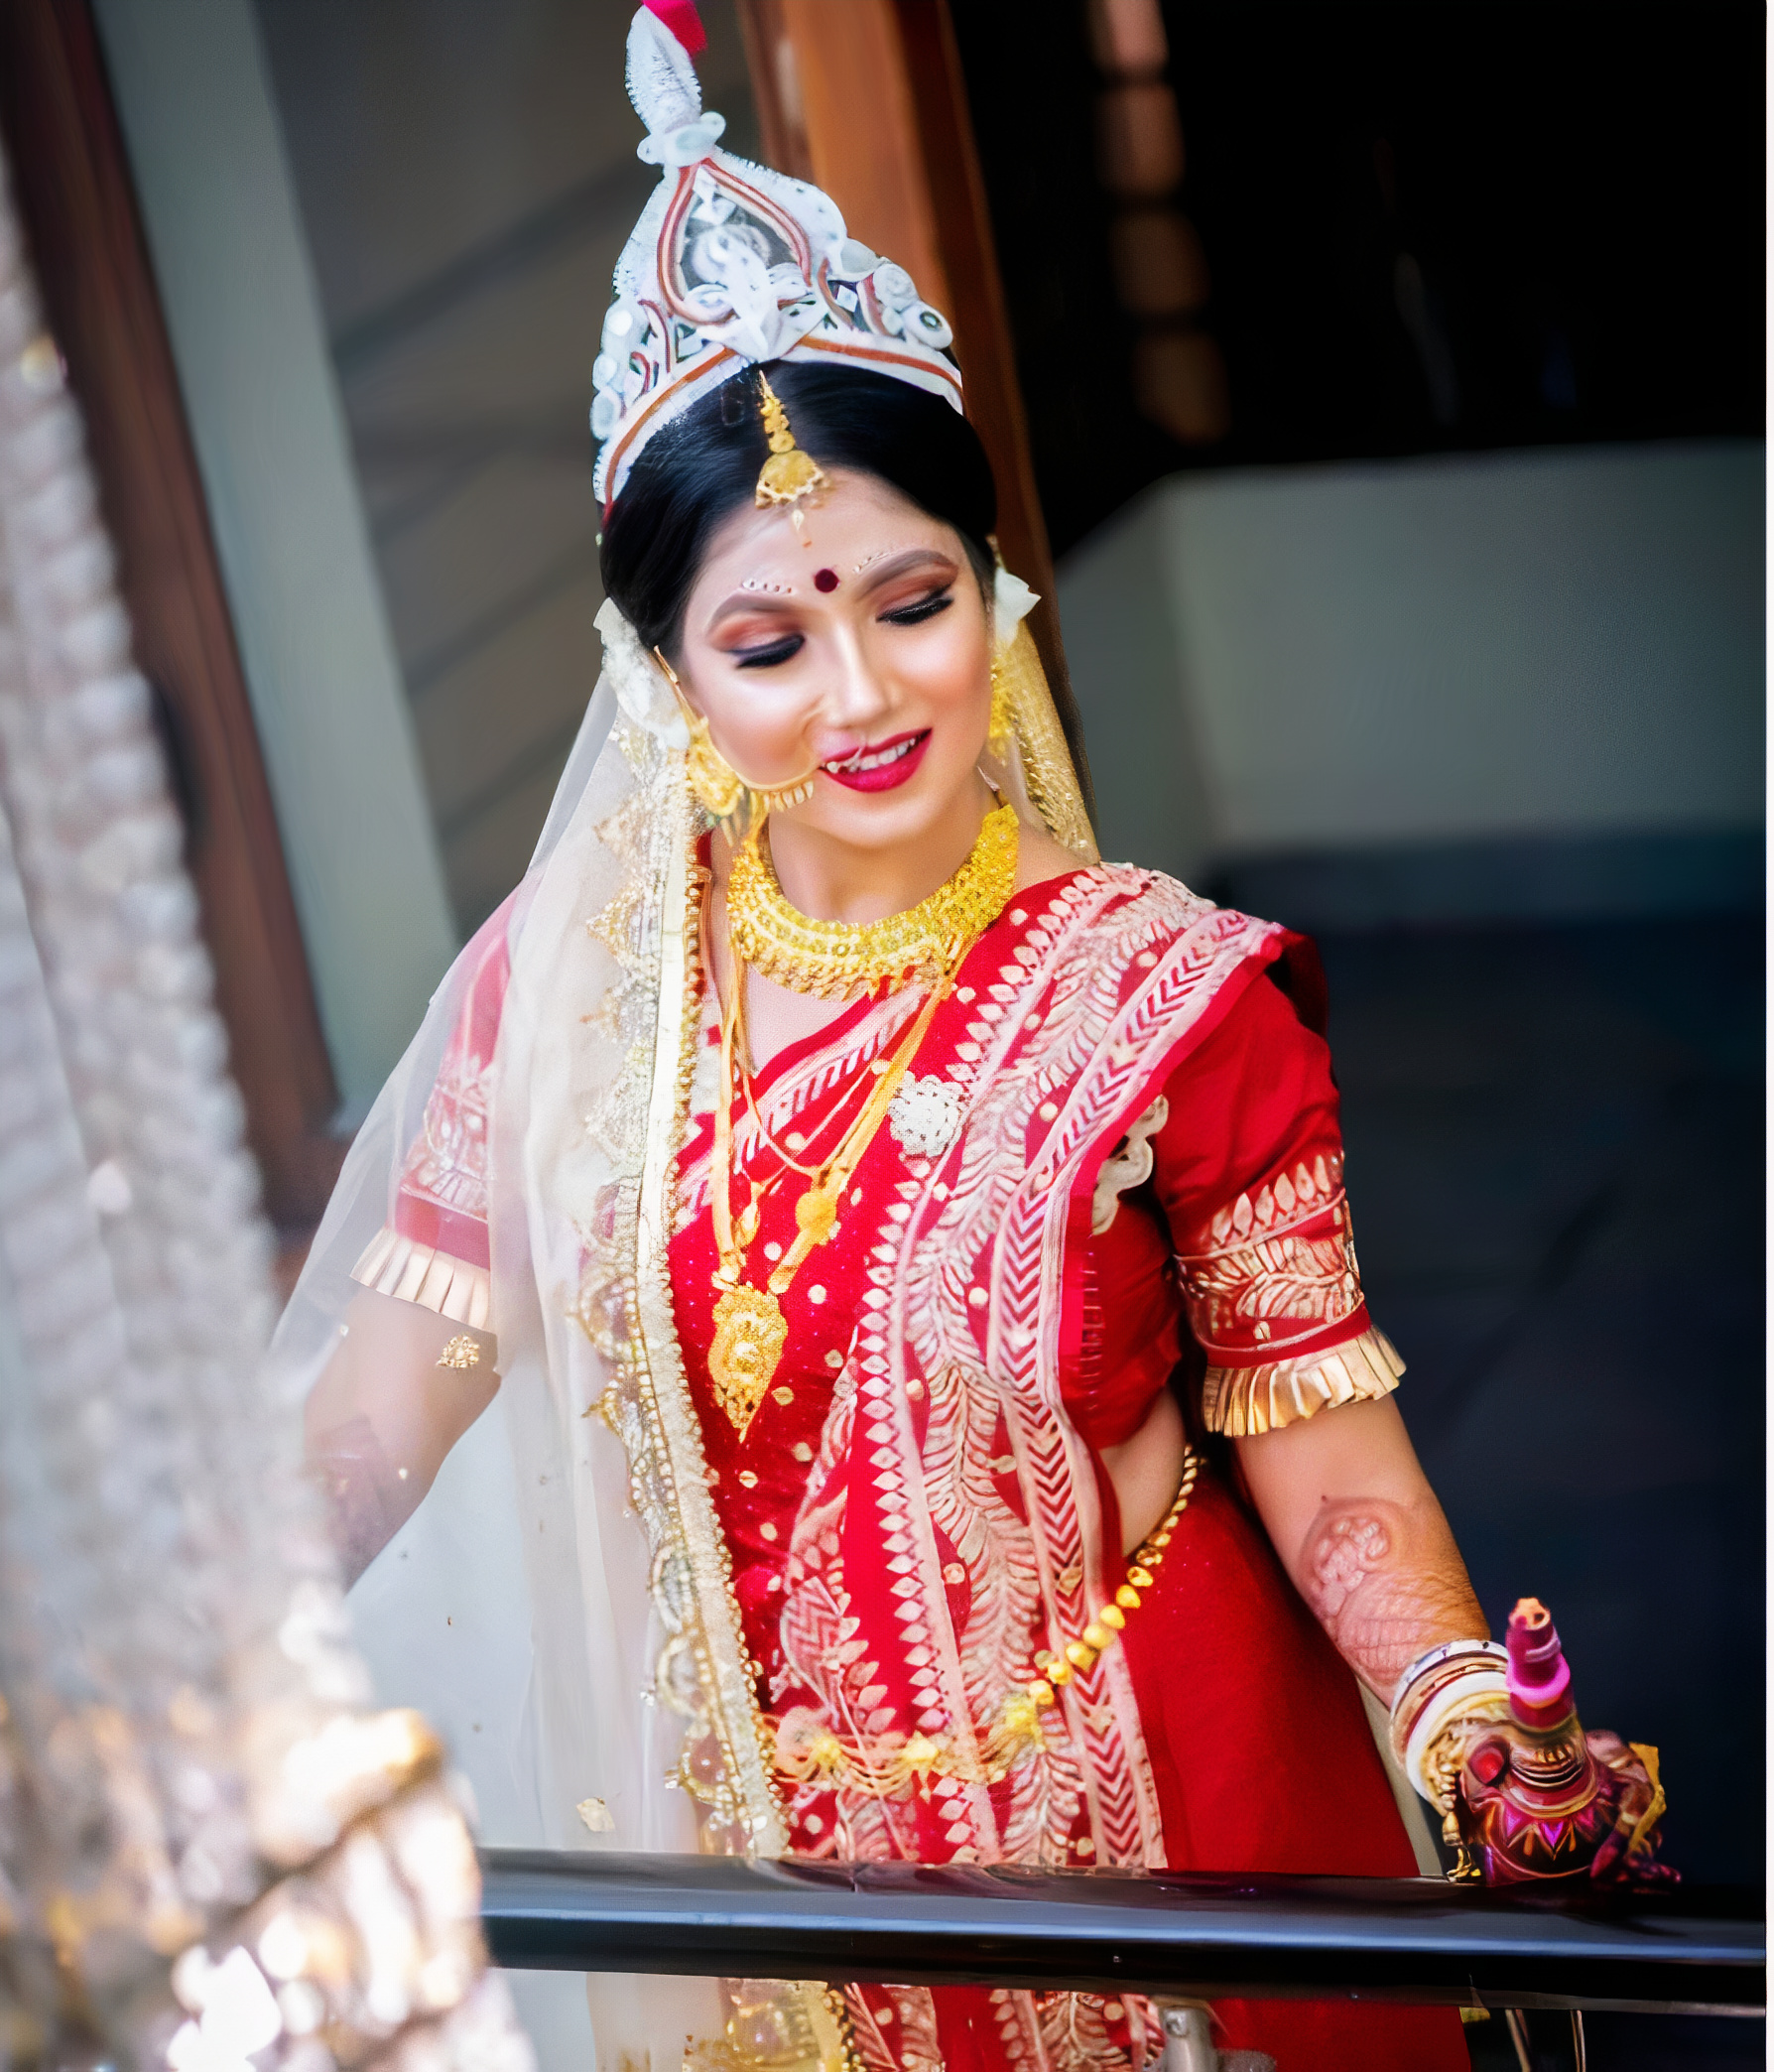 The Most Beautiful Bengali Wedding Dress Ever!